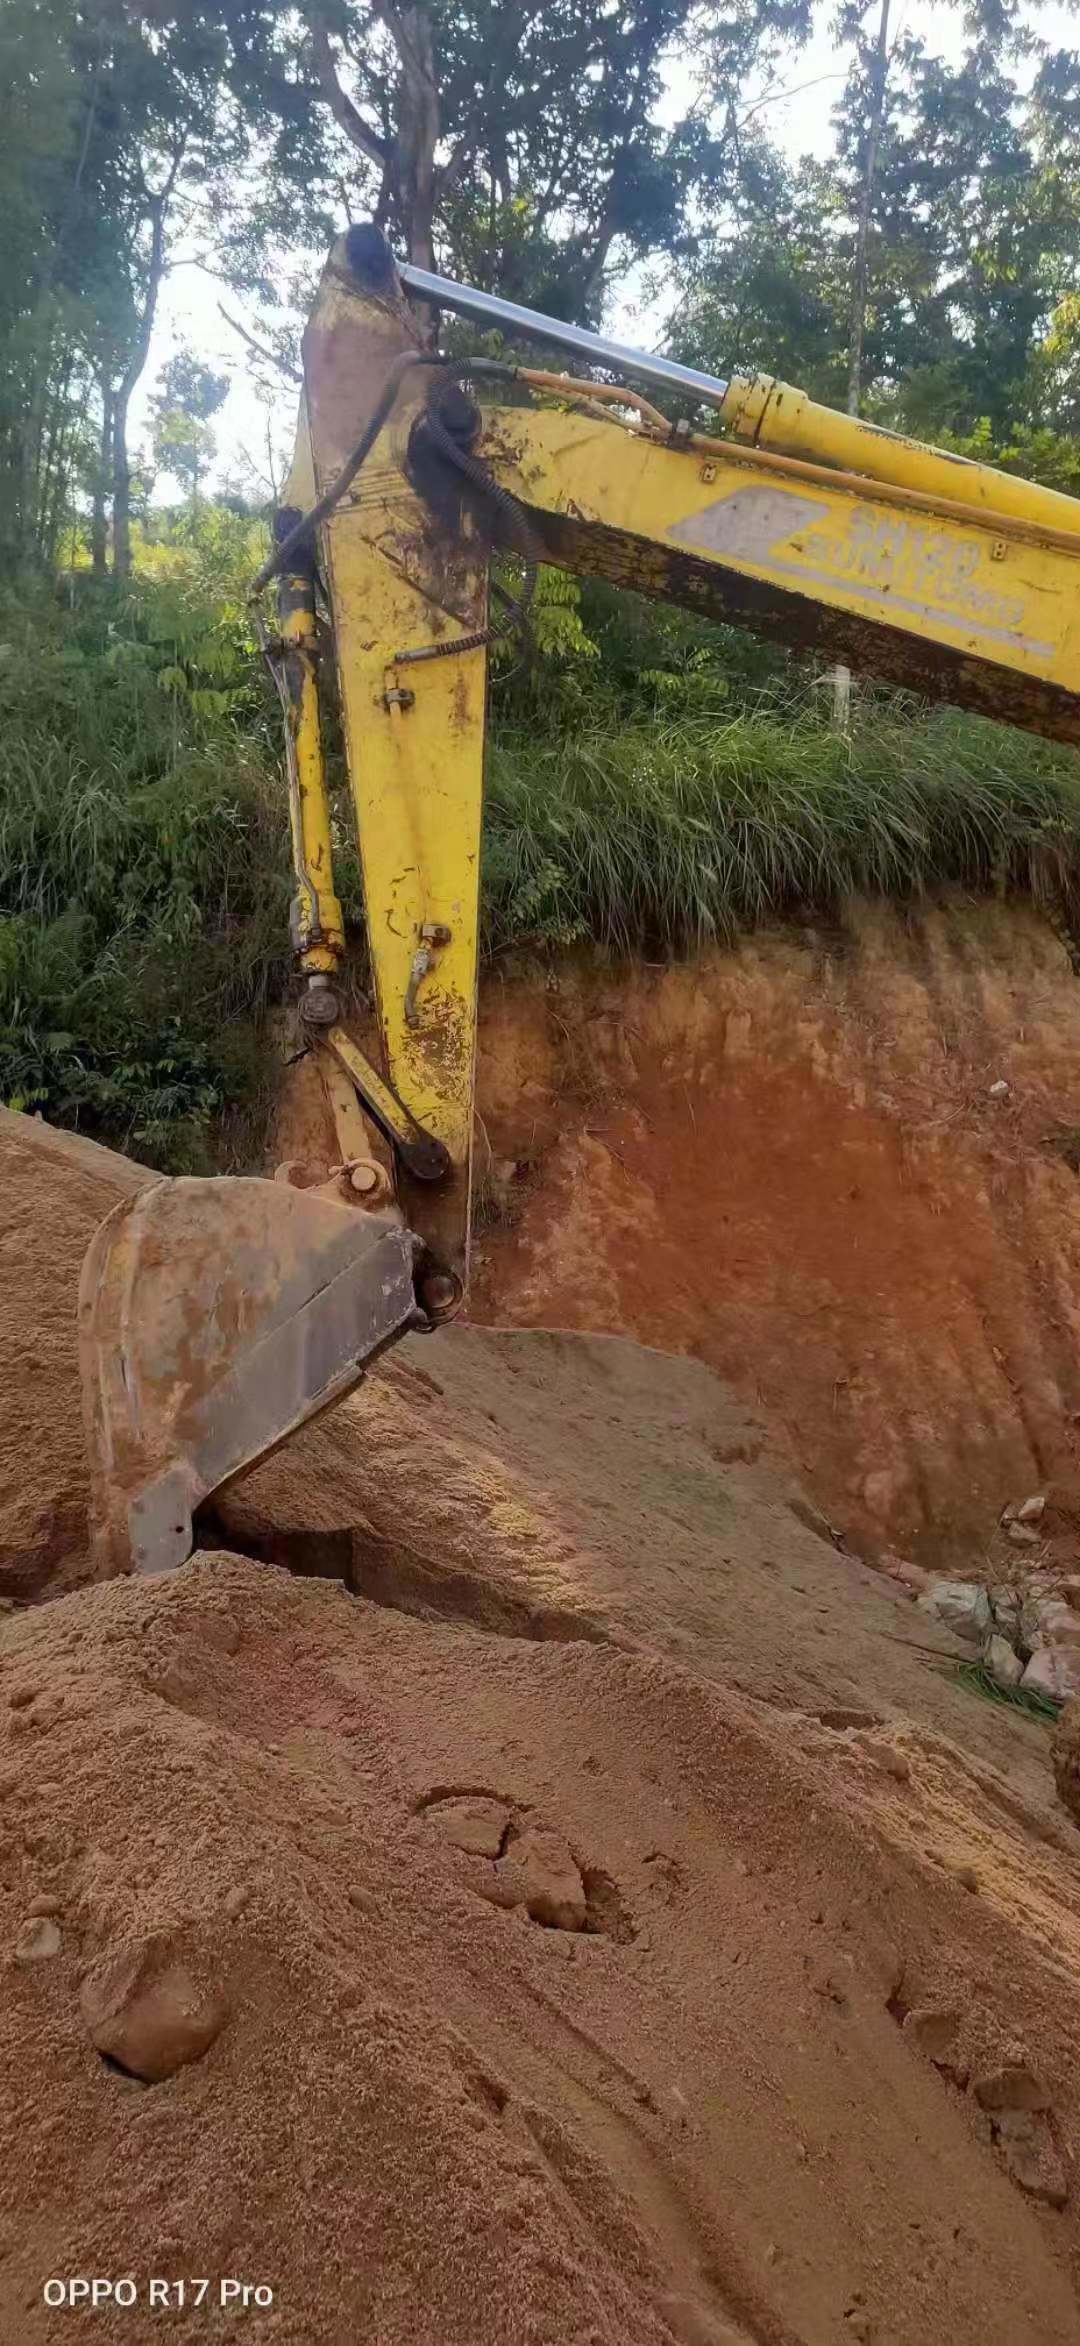 Used Japan Sumitomo Sh120 Crawler Excavator! Secondhand Simitomo Sh120 Excavator with Good Condition in Low Price